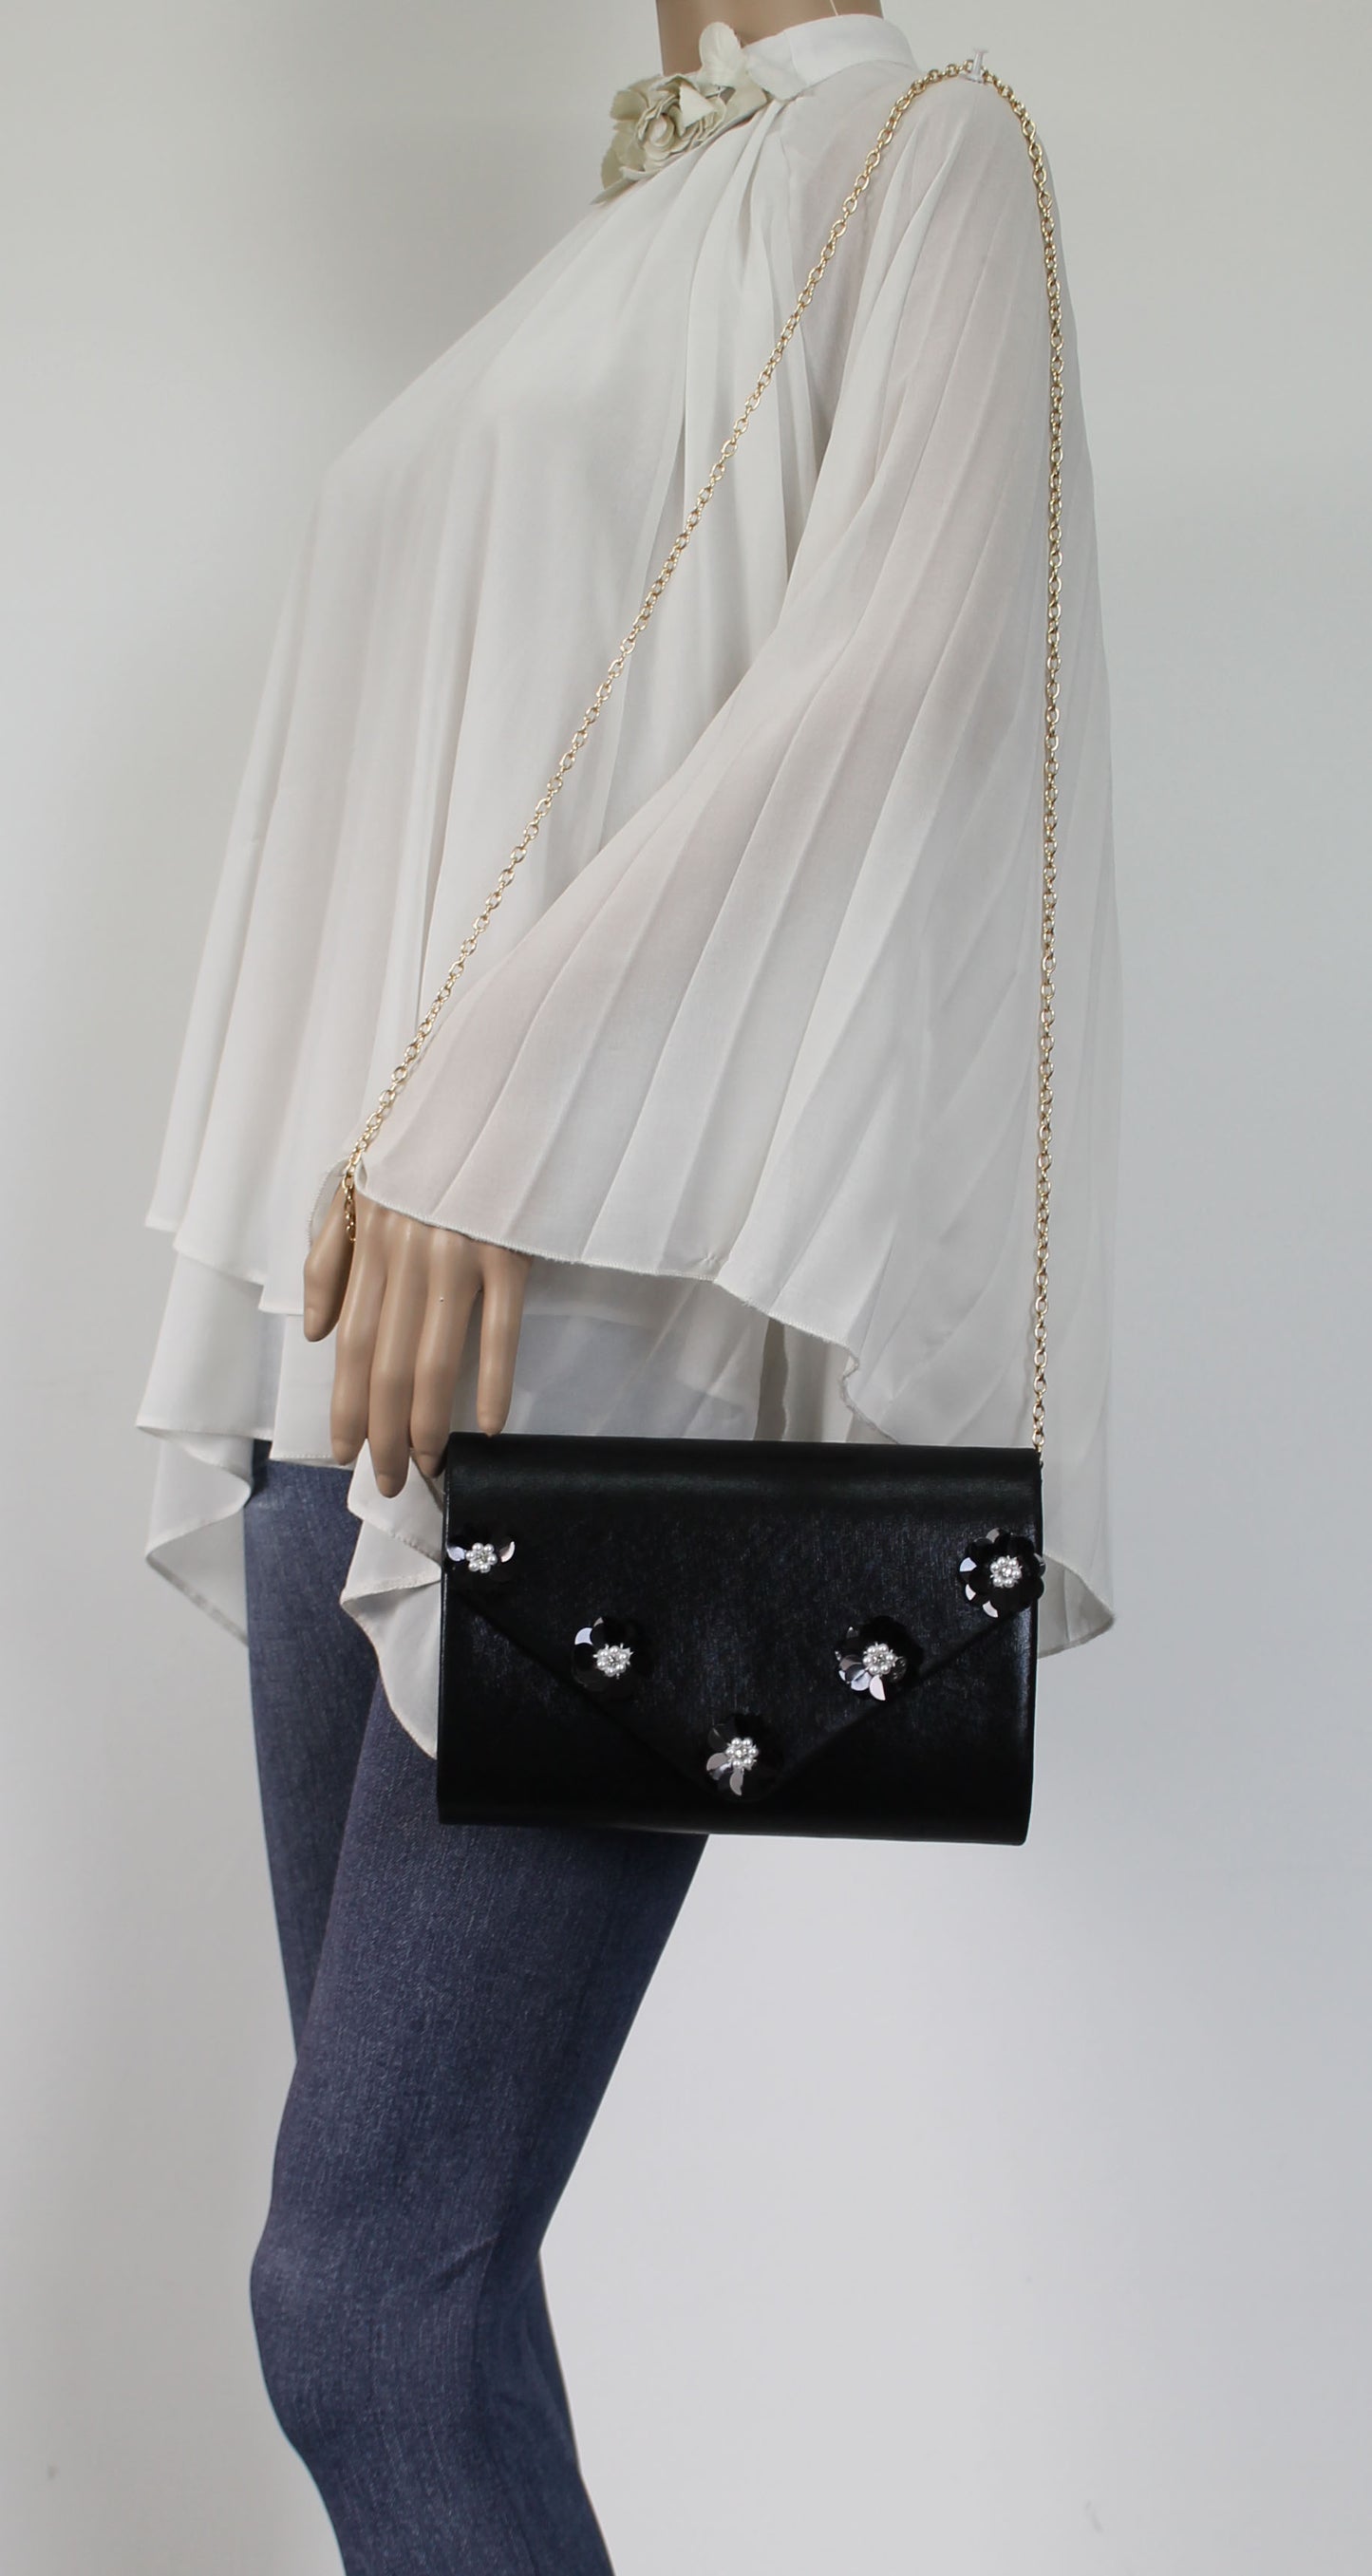 SWANKYSWANS Josie Clutch Bag Black Cute Cheap Clutch Bag For Weddings School and Work